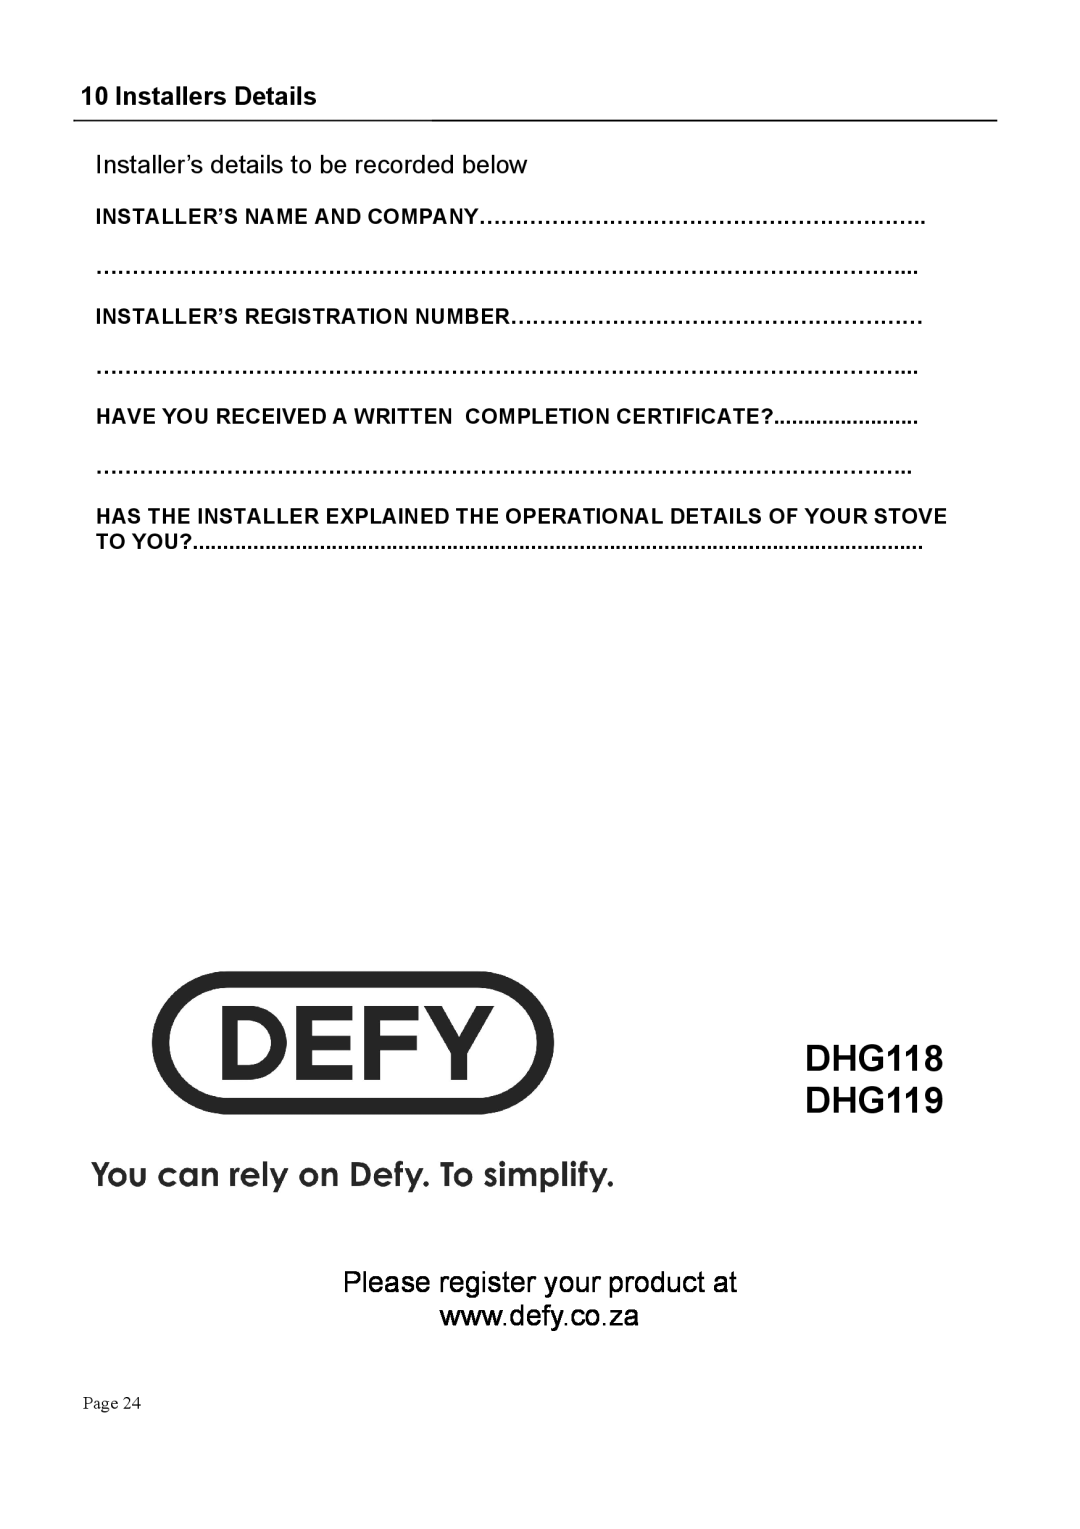 Defy Appliances DHG118/DHG119 manual 8+&**%+&,*+, K!!$* $*$, Mmmmmmmmmmmmmmmmmmmmmmmmmmmmmmmmmmmmm, 0,!8$%$ &8&$ 